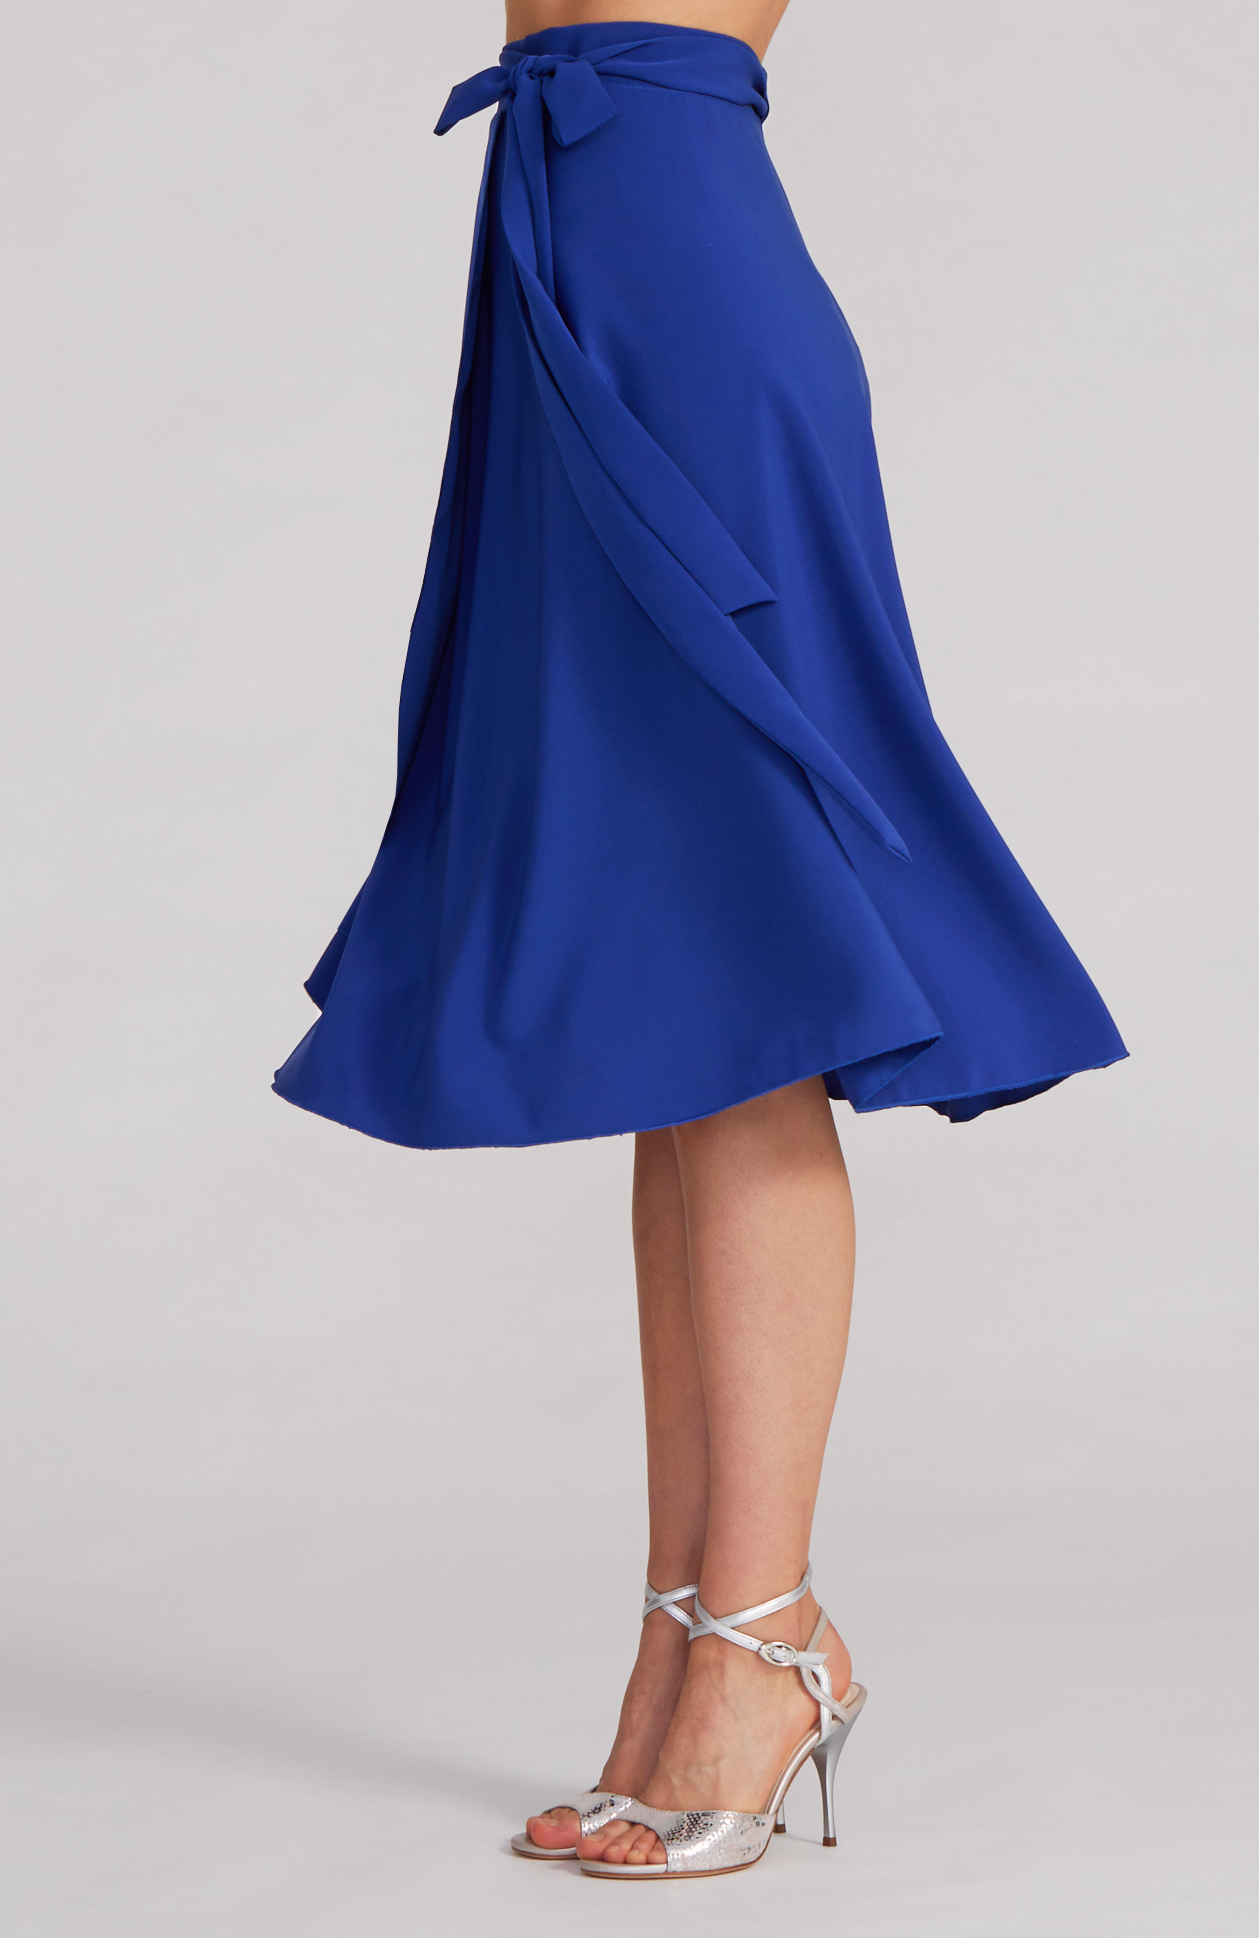 tango skirt in royal blue